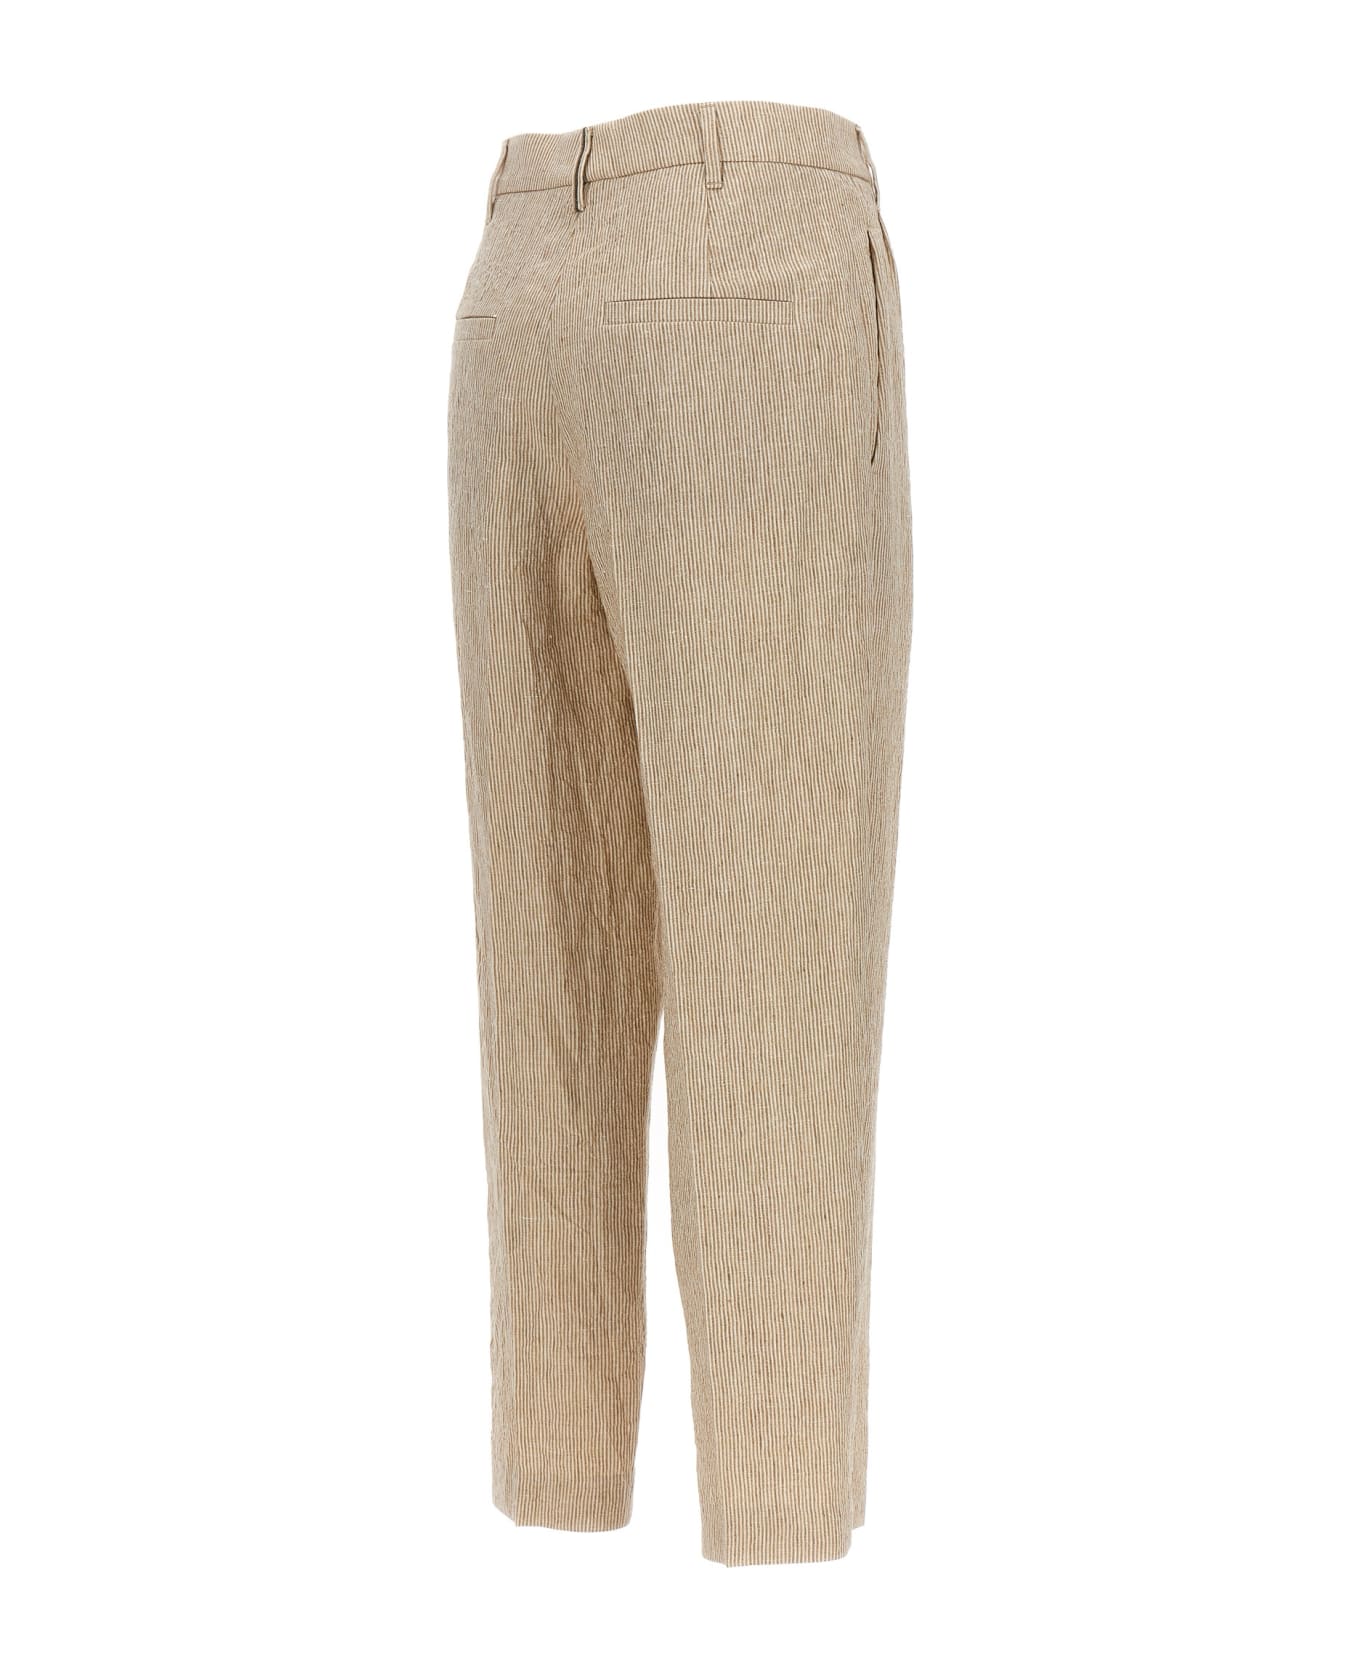 Brunello Cucinelli Striped Pleated Pants - Beige